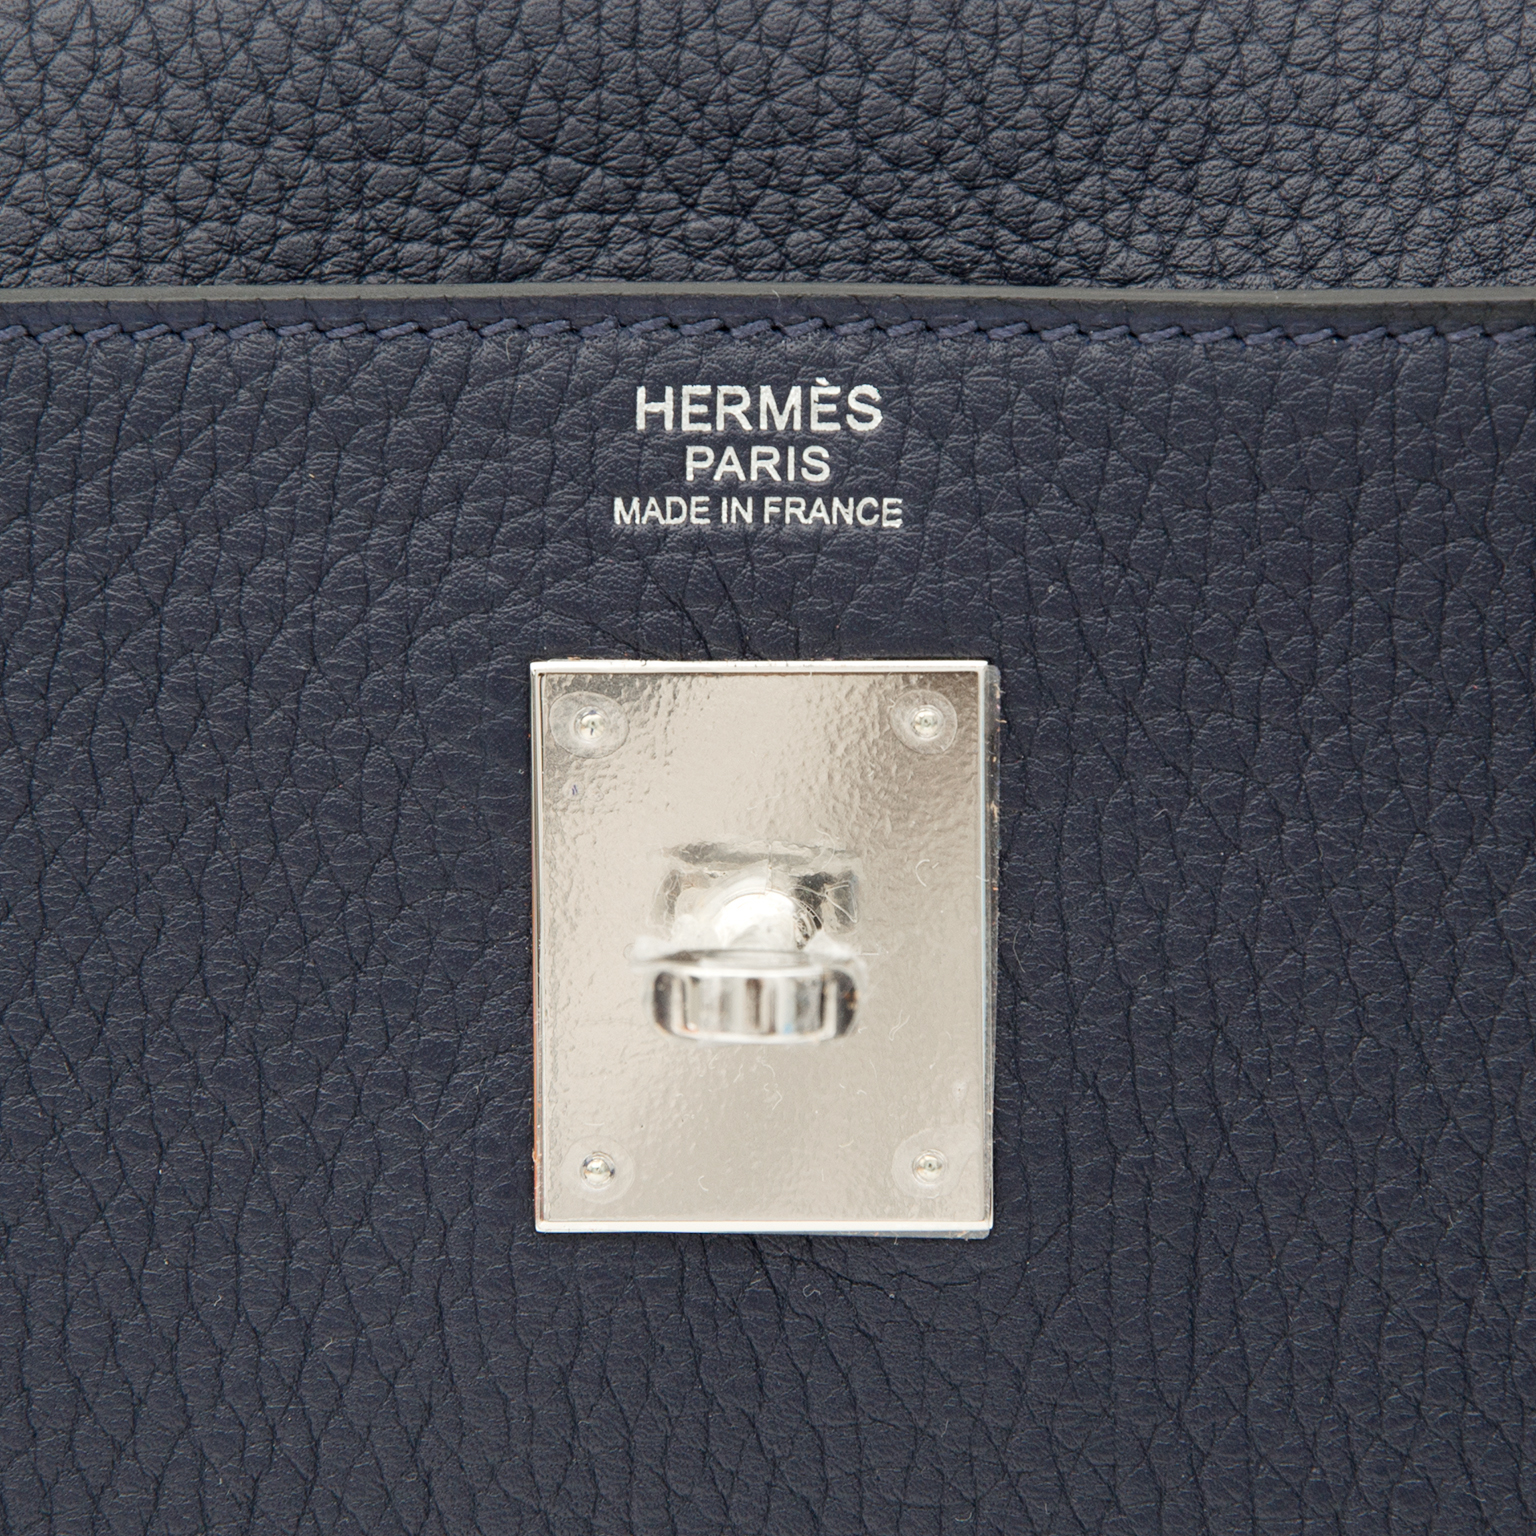 Hermès Kelly 32 Blue Nuit Clemence Satin - Vintage Lux